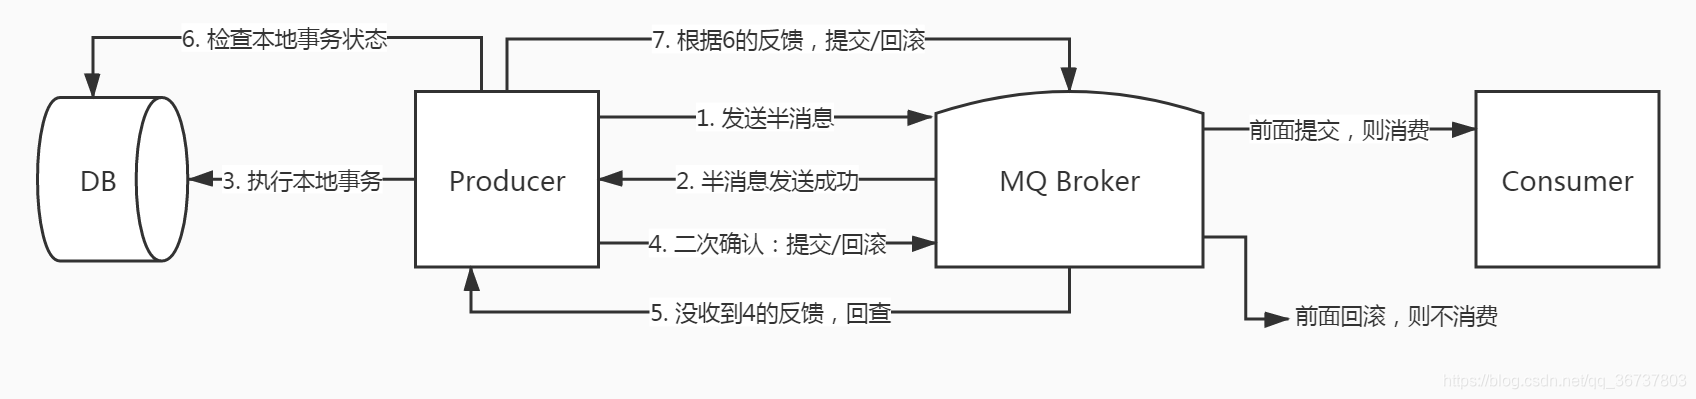 RocketMQ transaction process